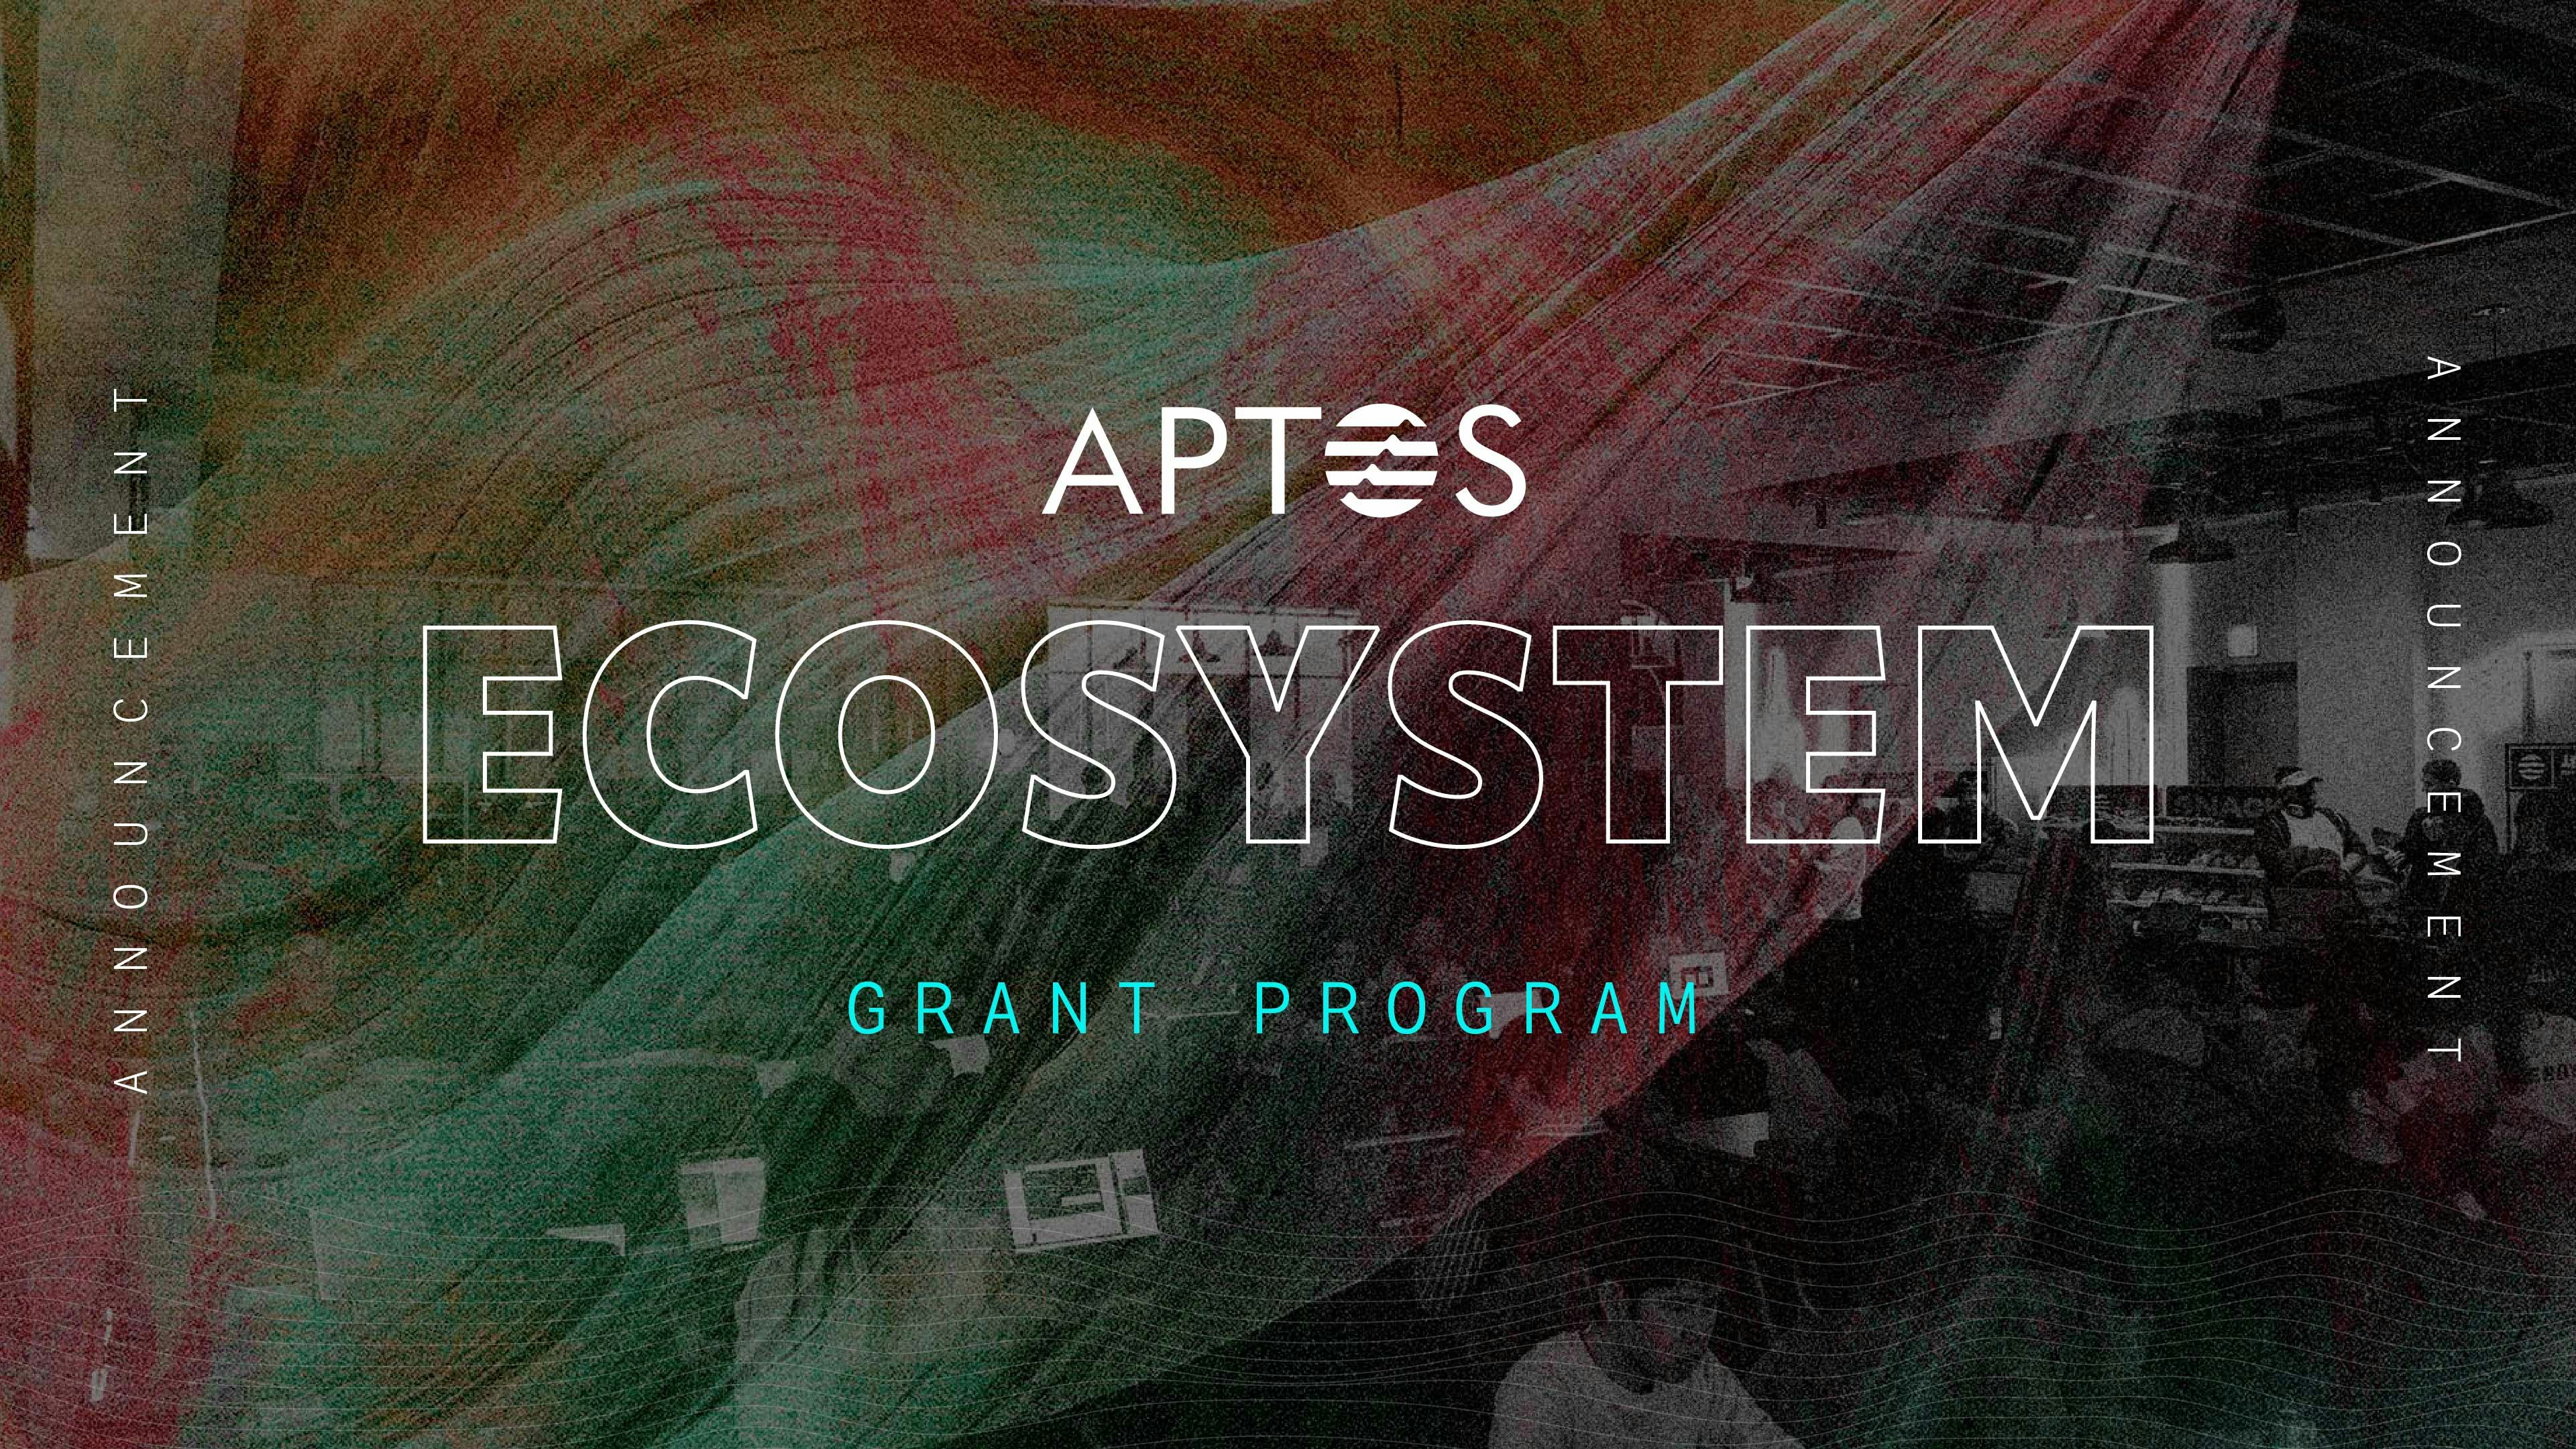 Aptos Ecosystem Grant Program announcement poster artwork